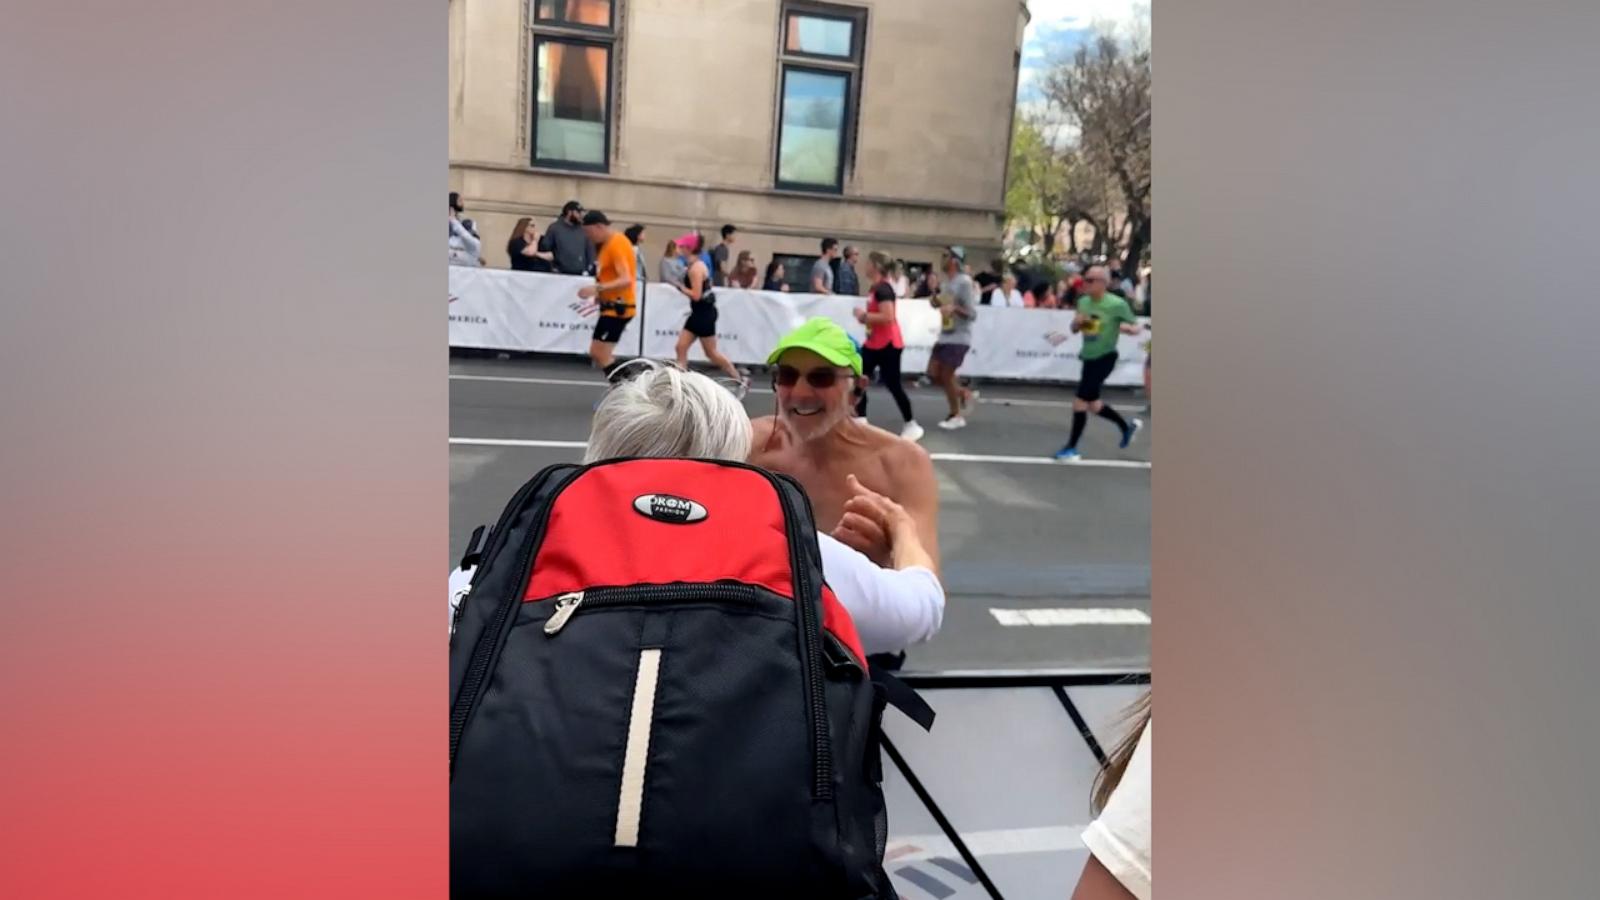 VIDEO: Strangers help woman at Boston Marathon flag down her 75-year-old runner husband